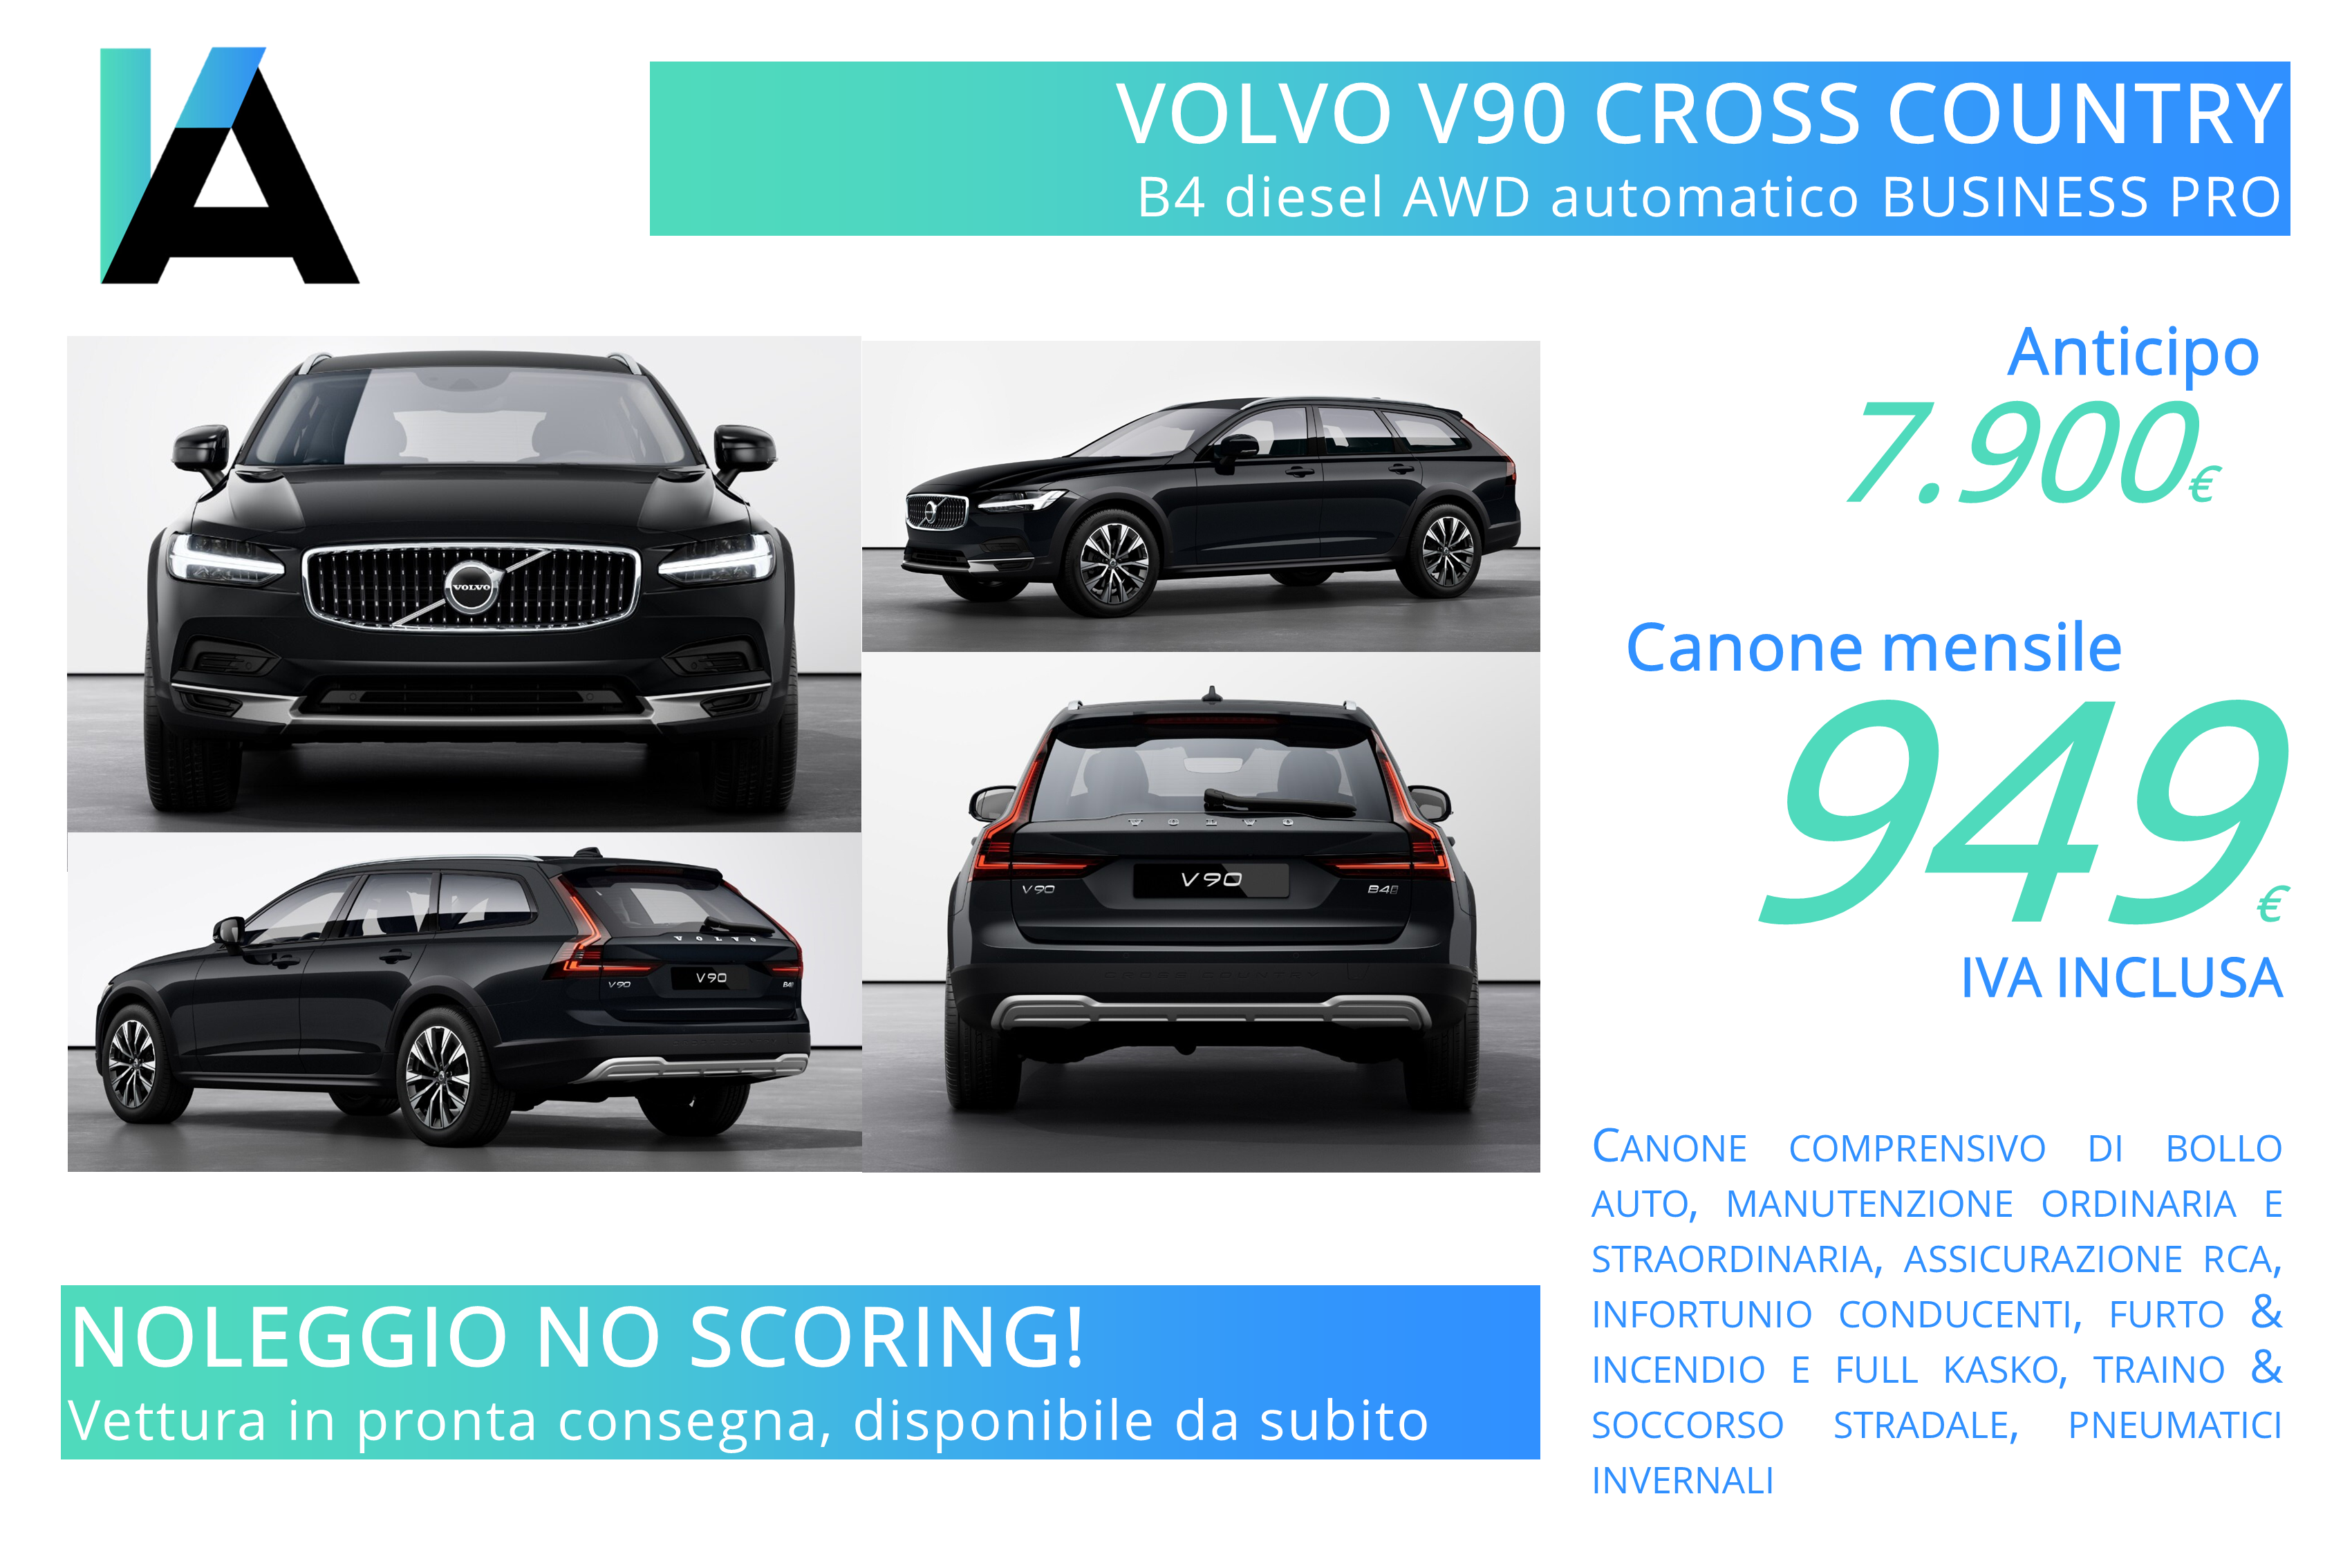 Volvo V90 Cross Country noleggio pronta consegna no scoring